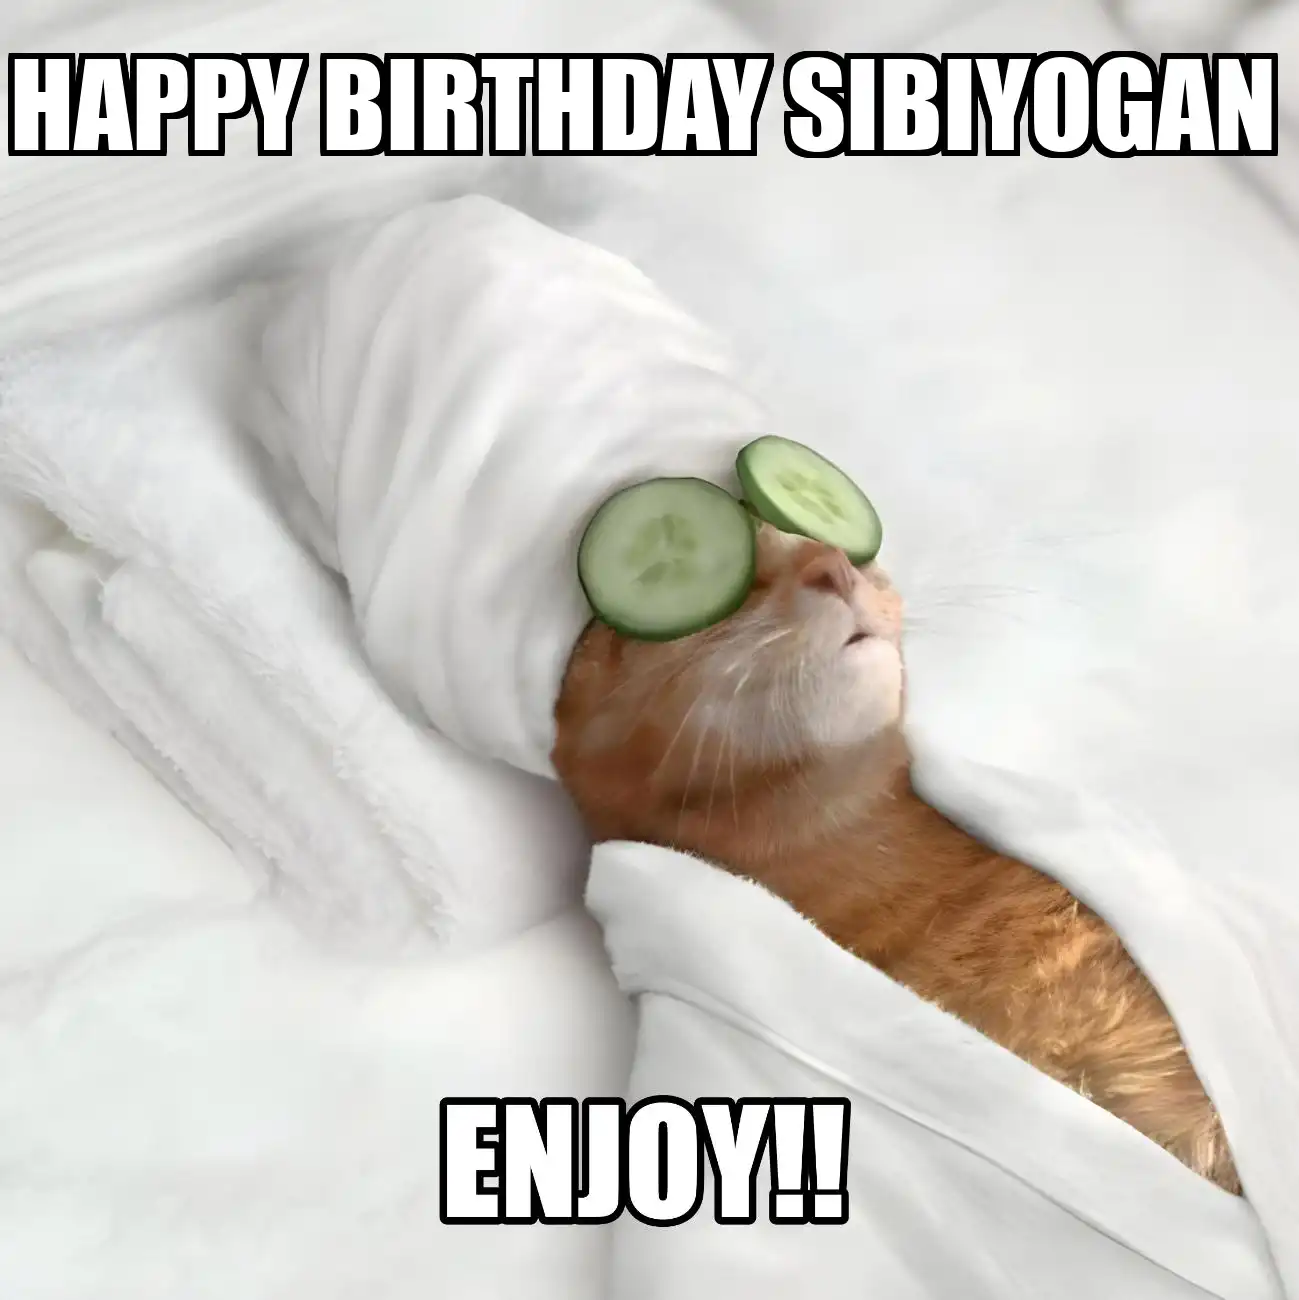 Happy Birthday Sibiyogan Enjoy Cat Meme